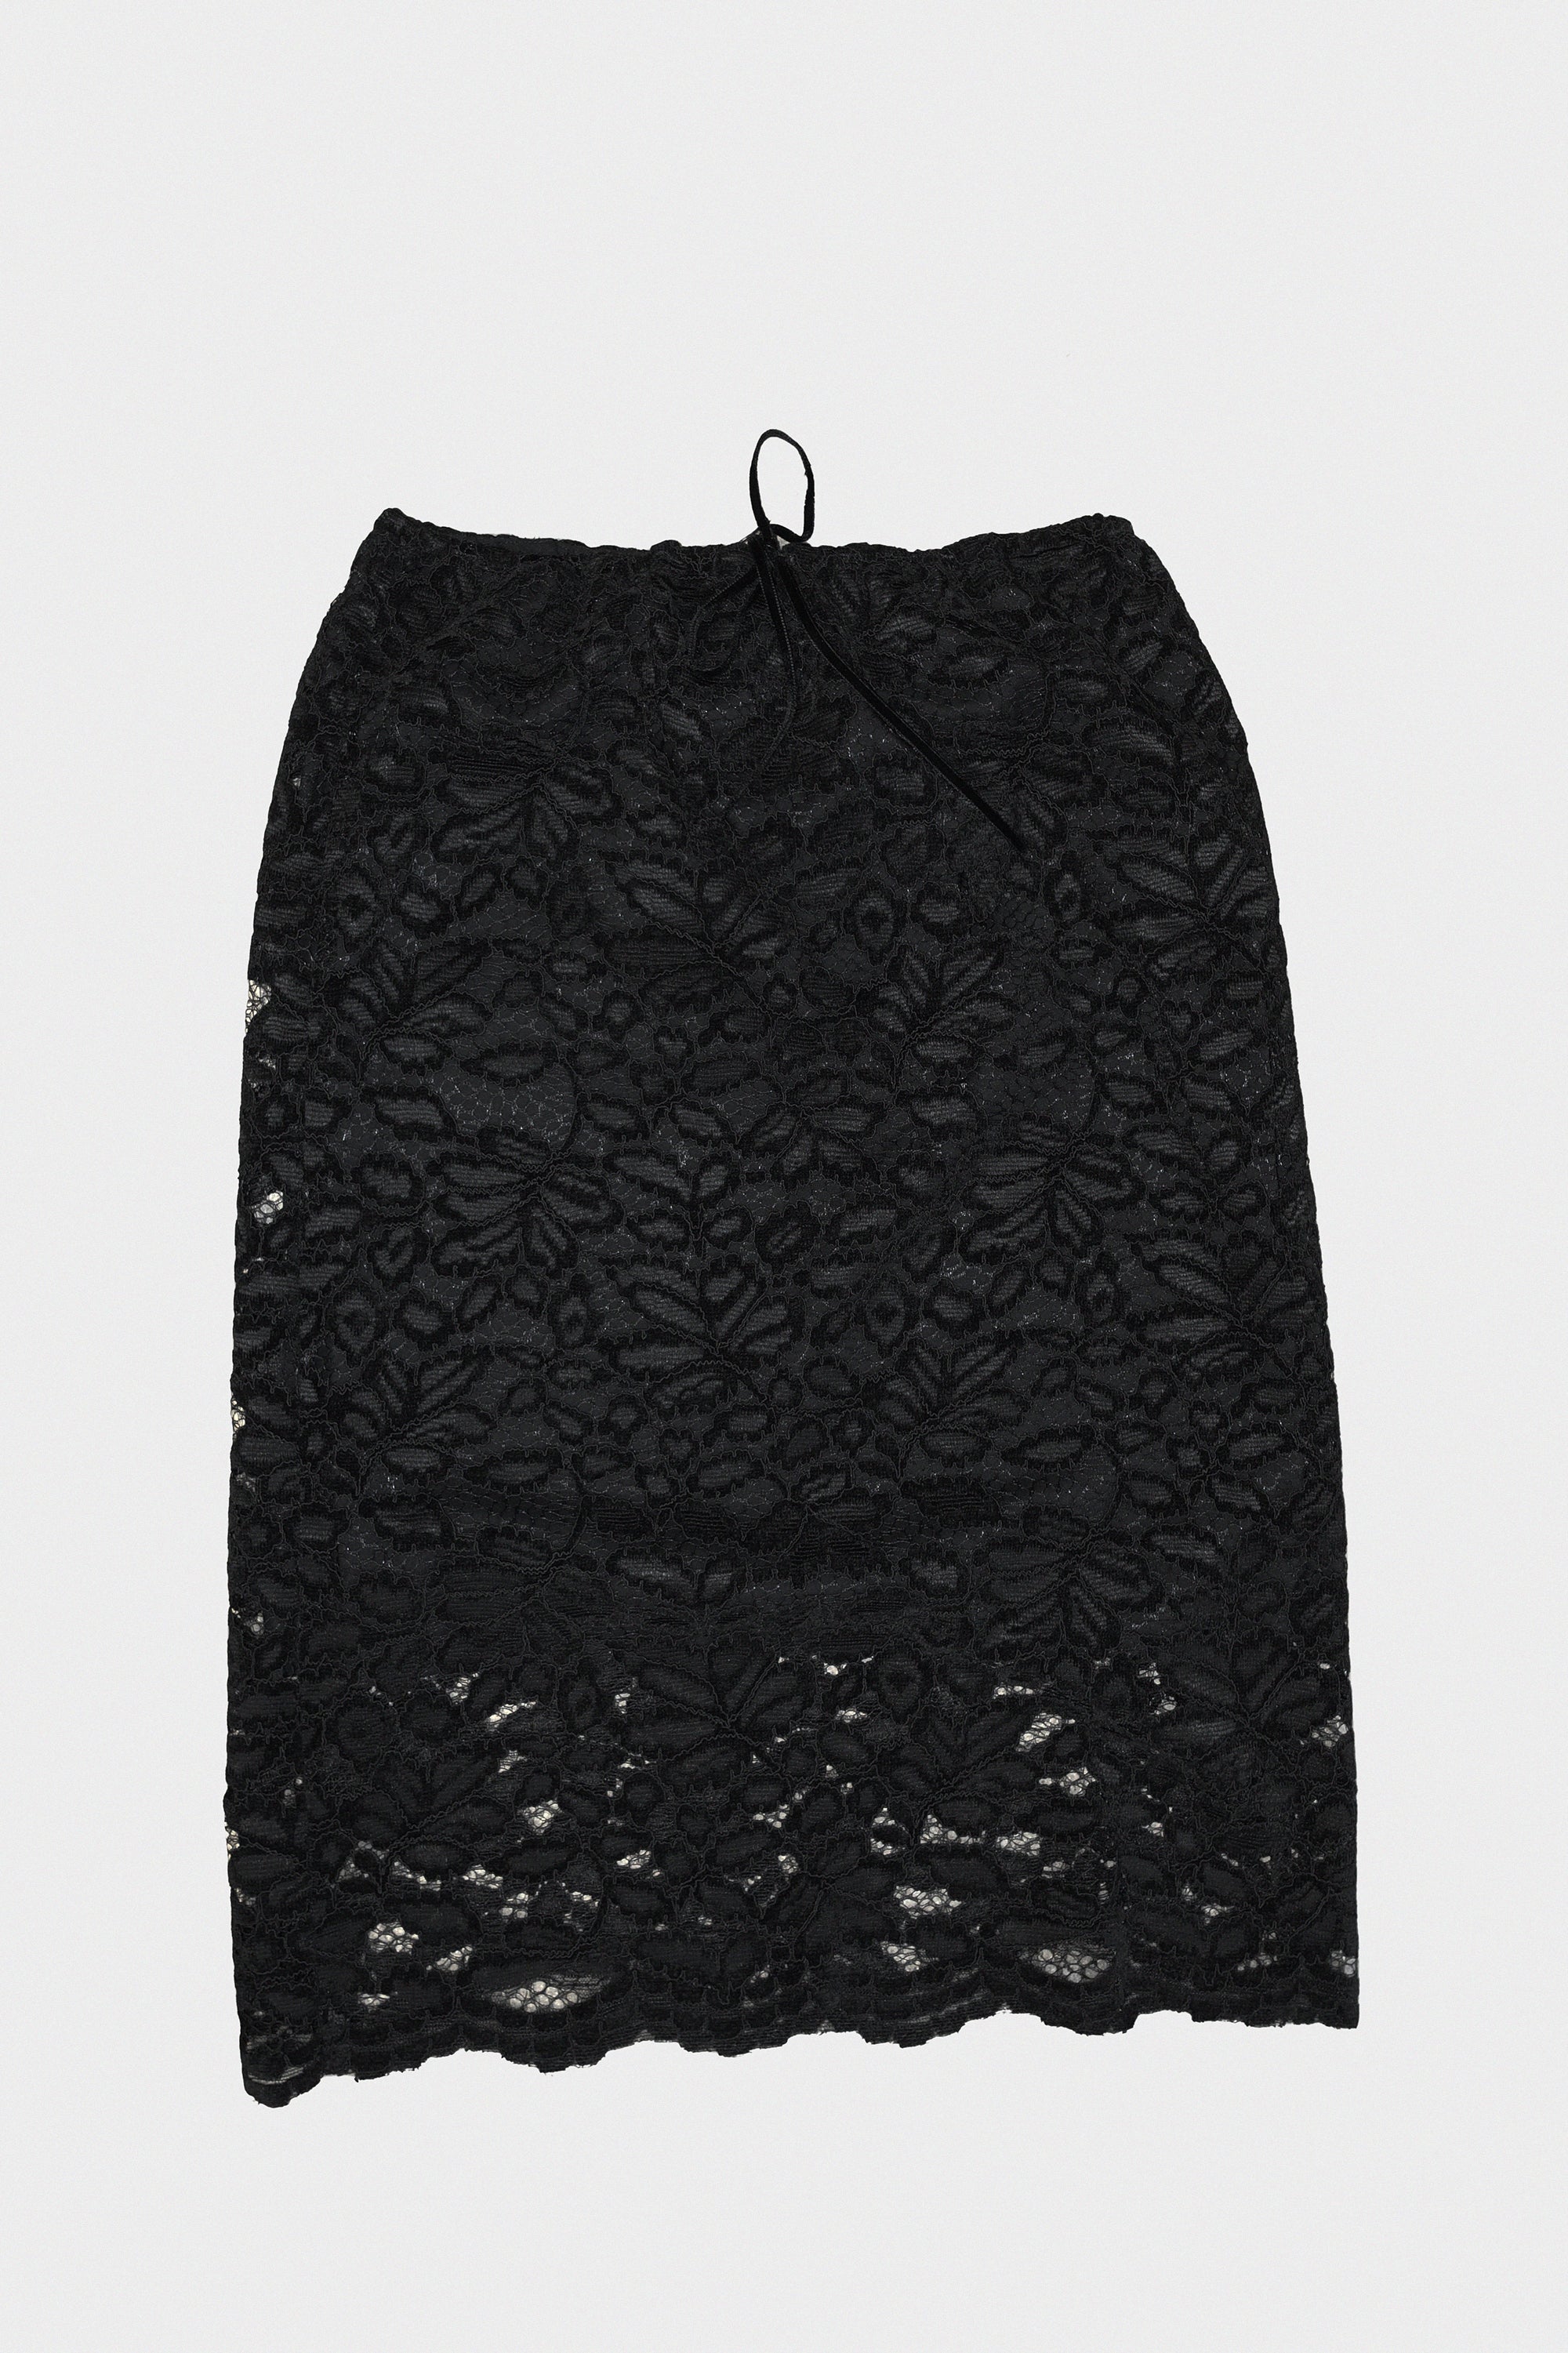 Mila Skirt in Black Lace